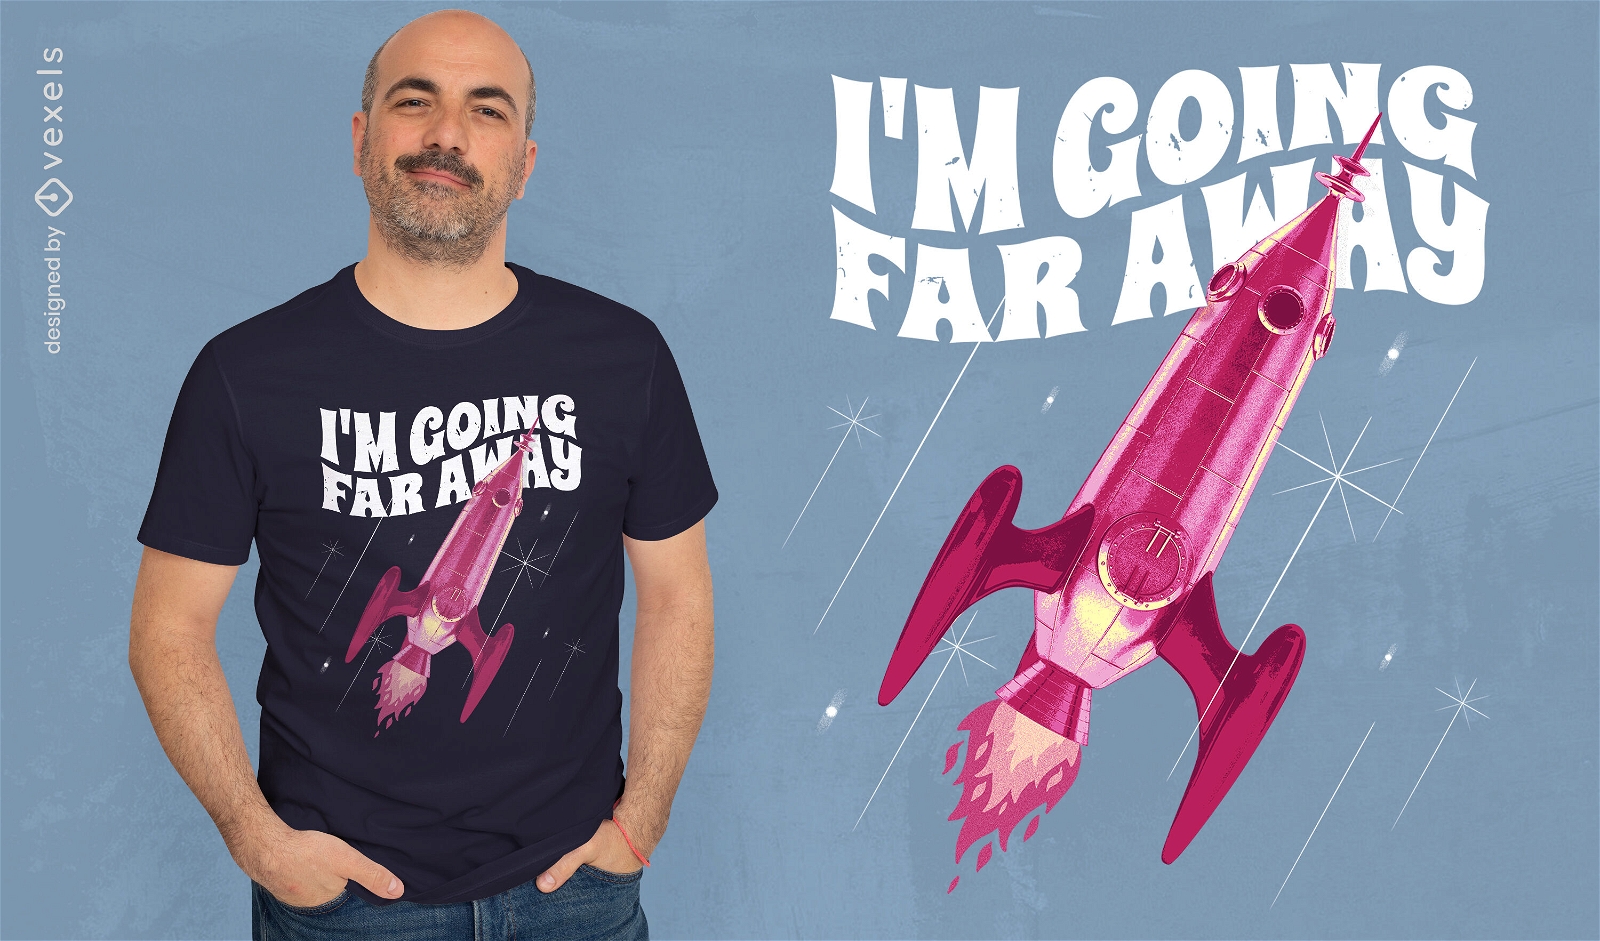 Rocket travel quote t-shirt design